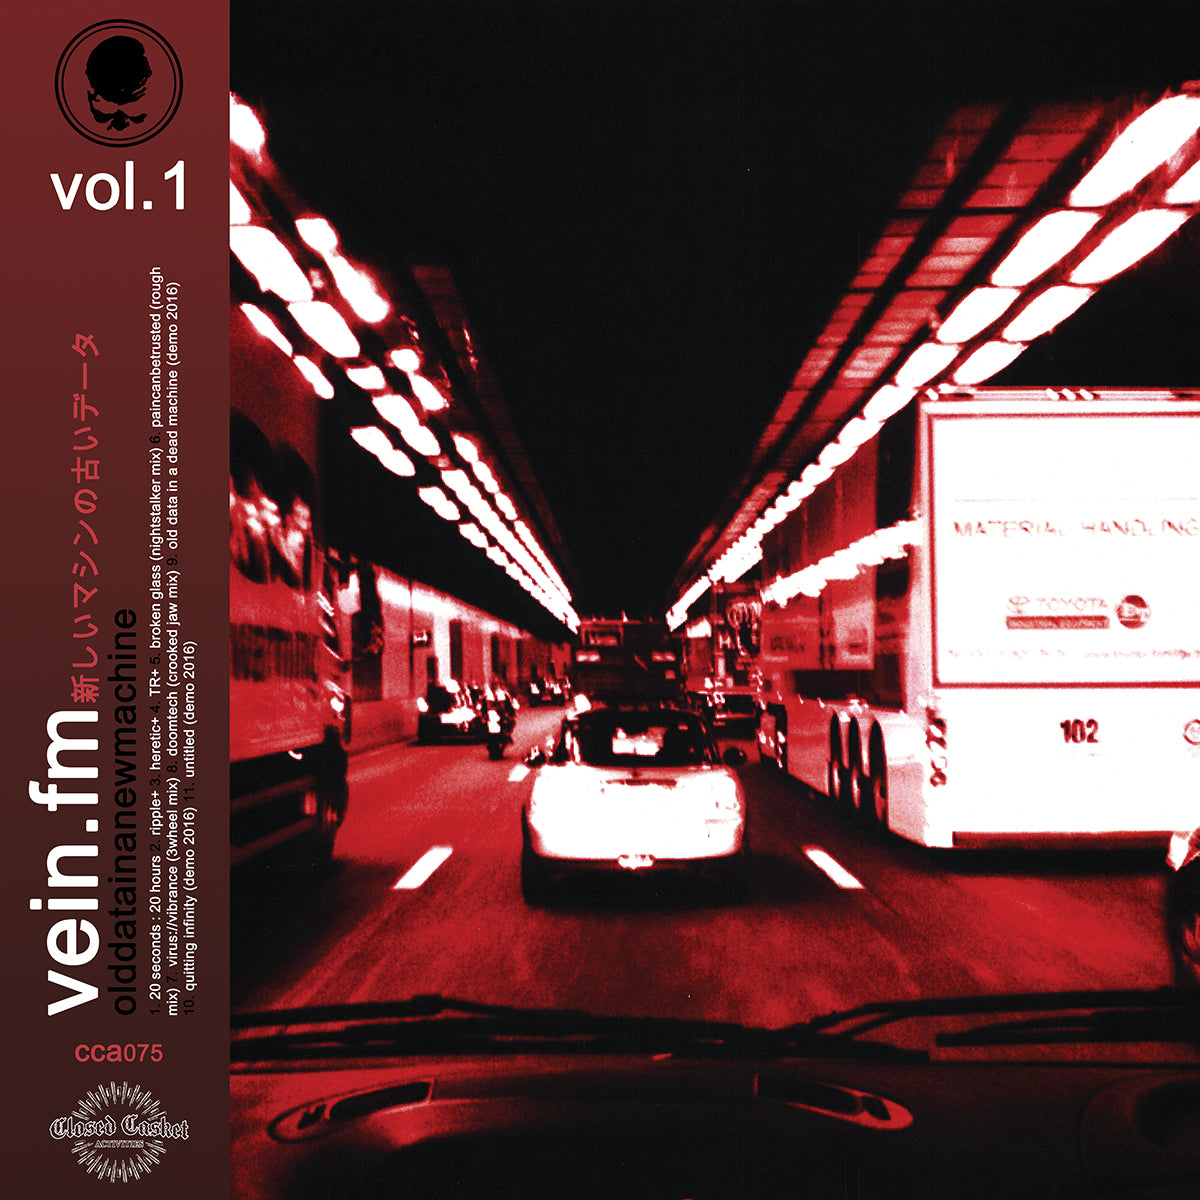 VEIN.FM "Old Data In A New Machine Vol. 1" CD